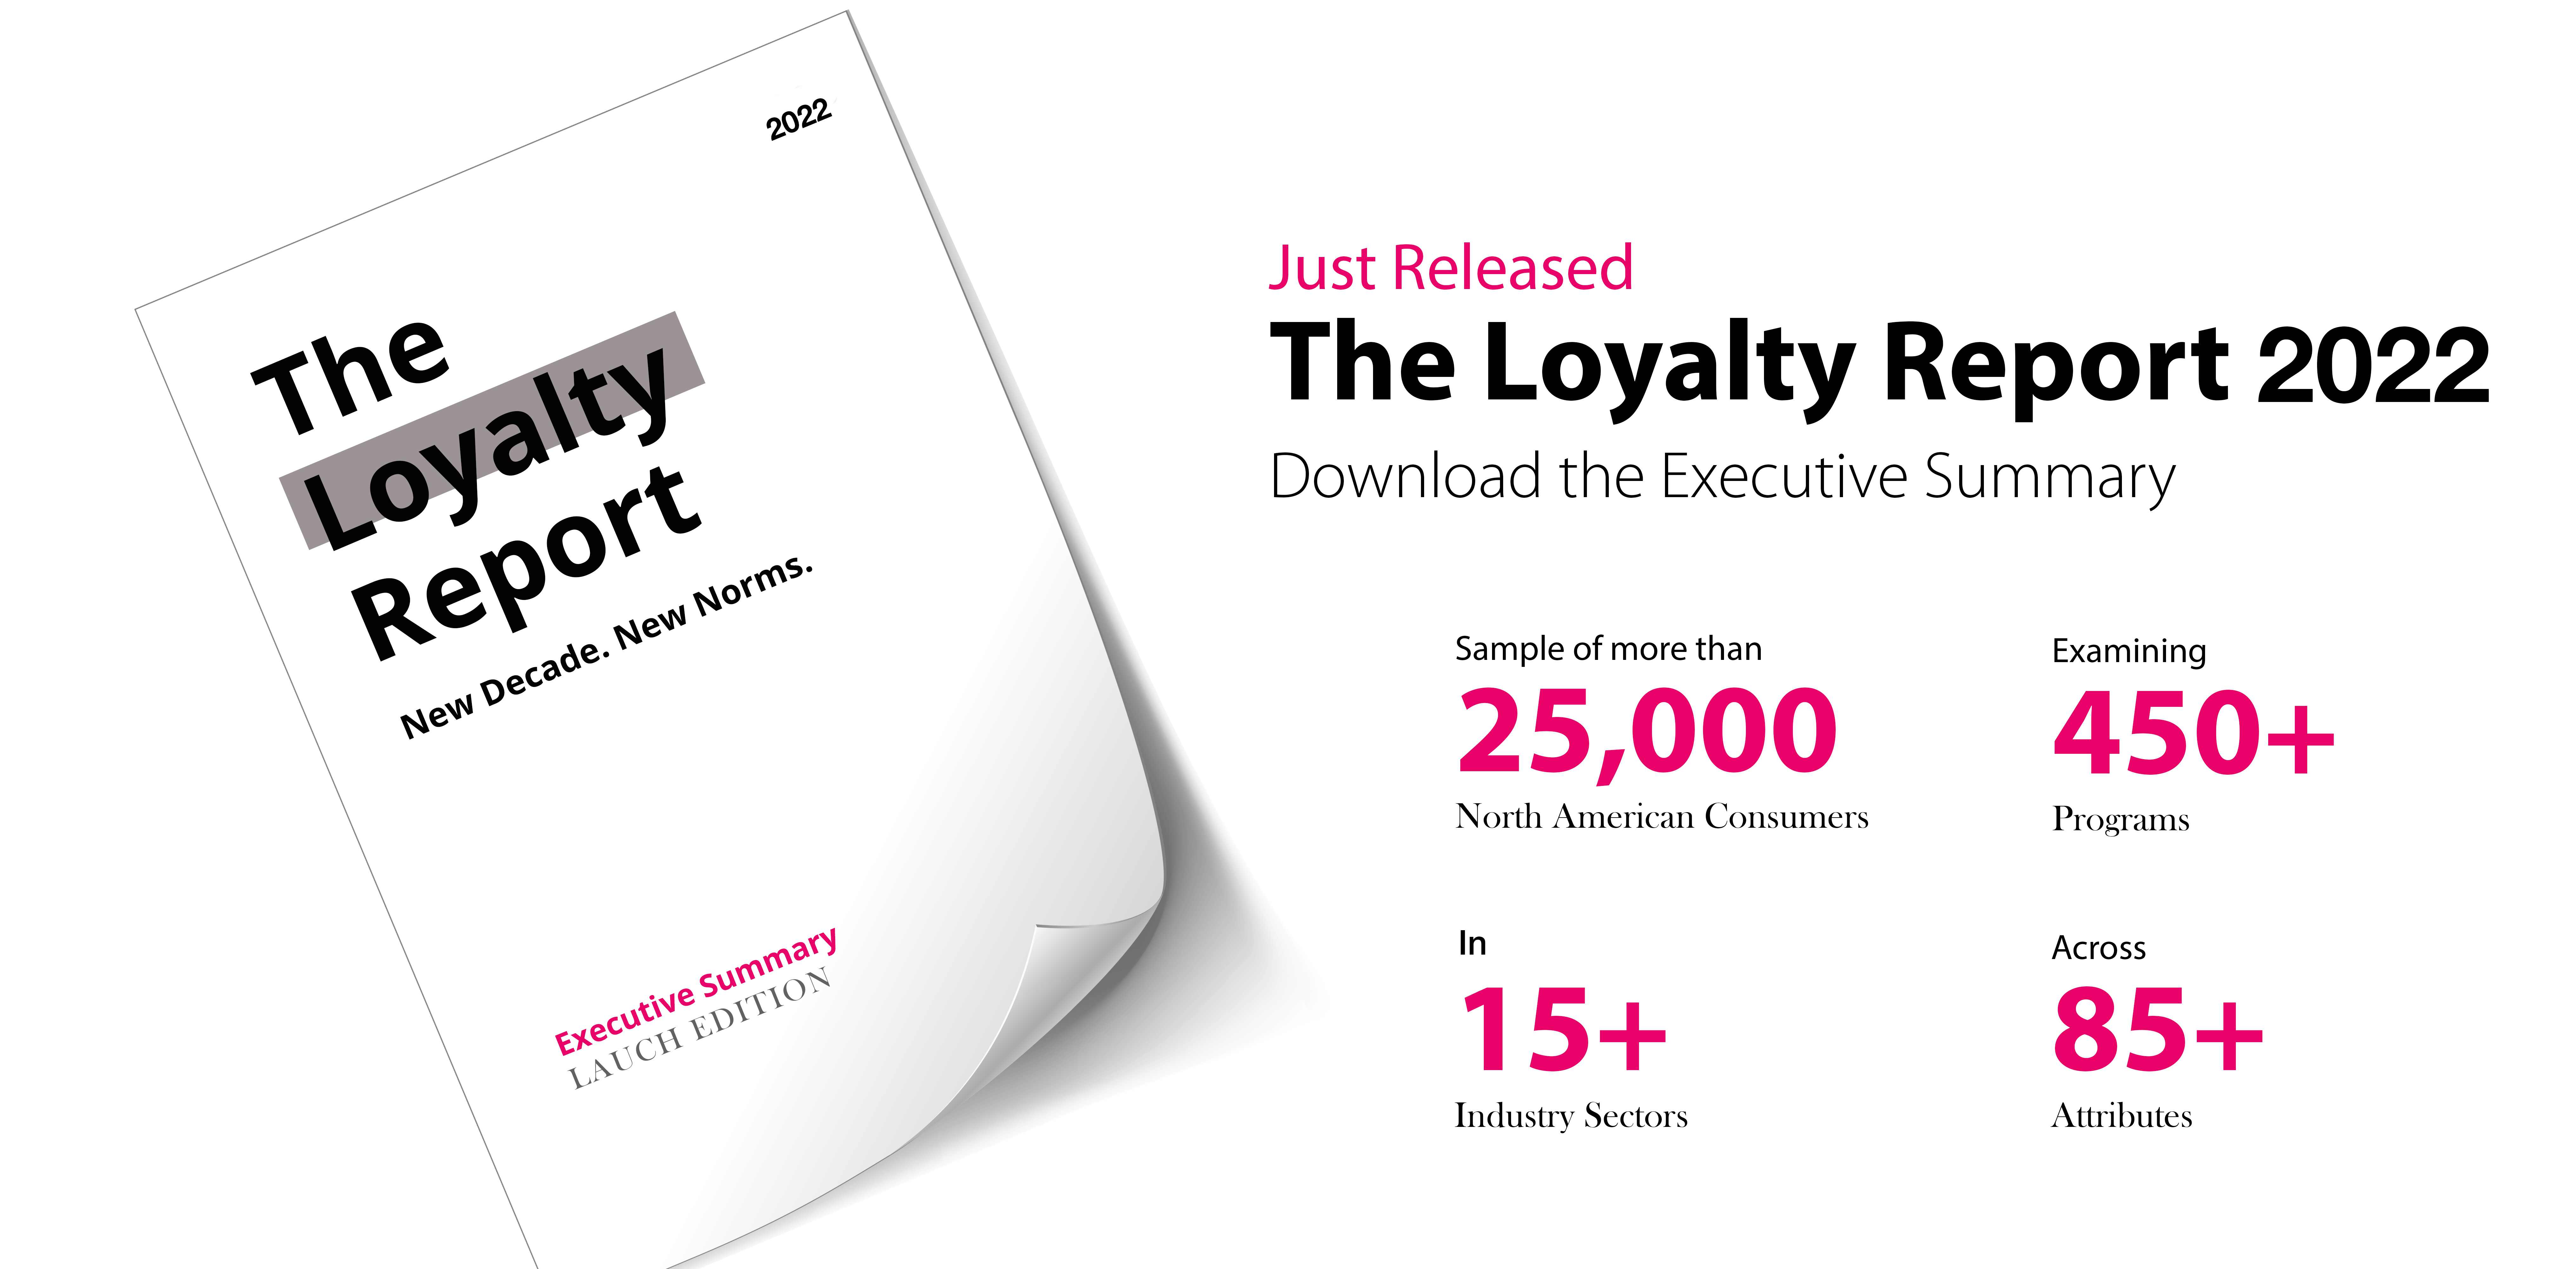 Customer Loyalty Report 2022